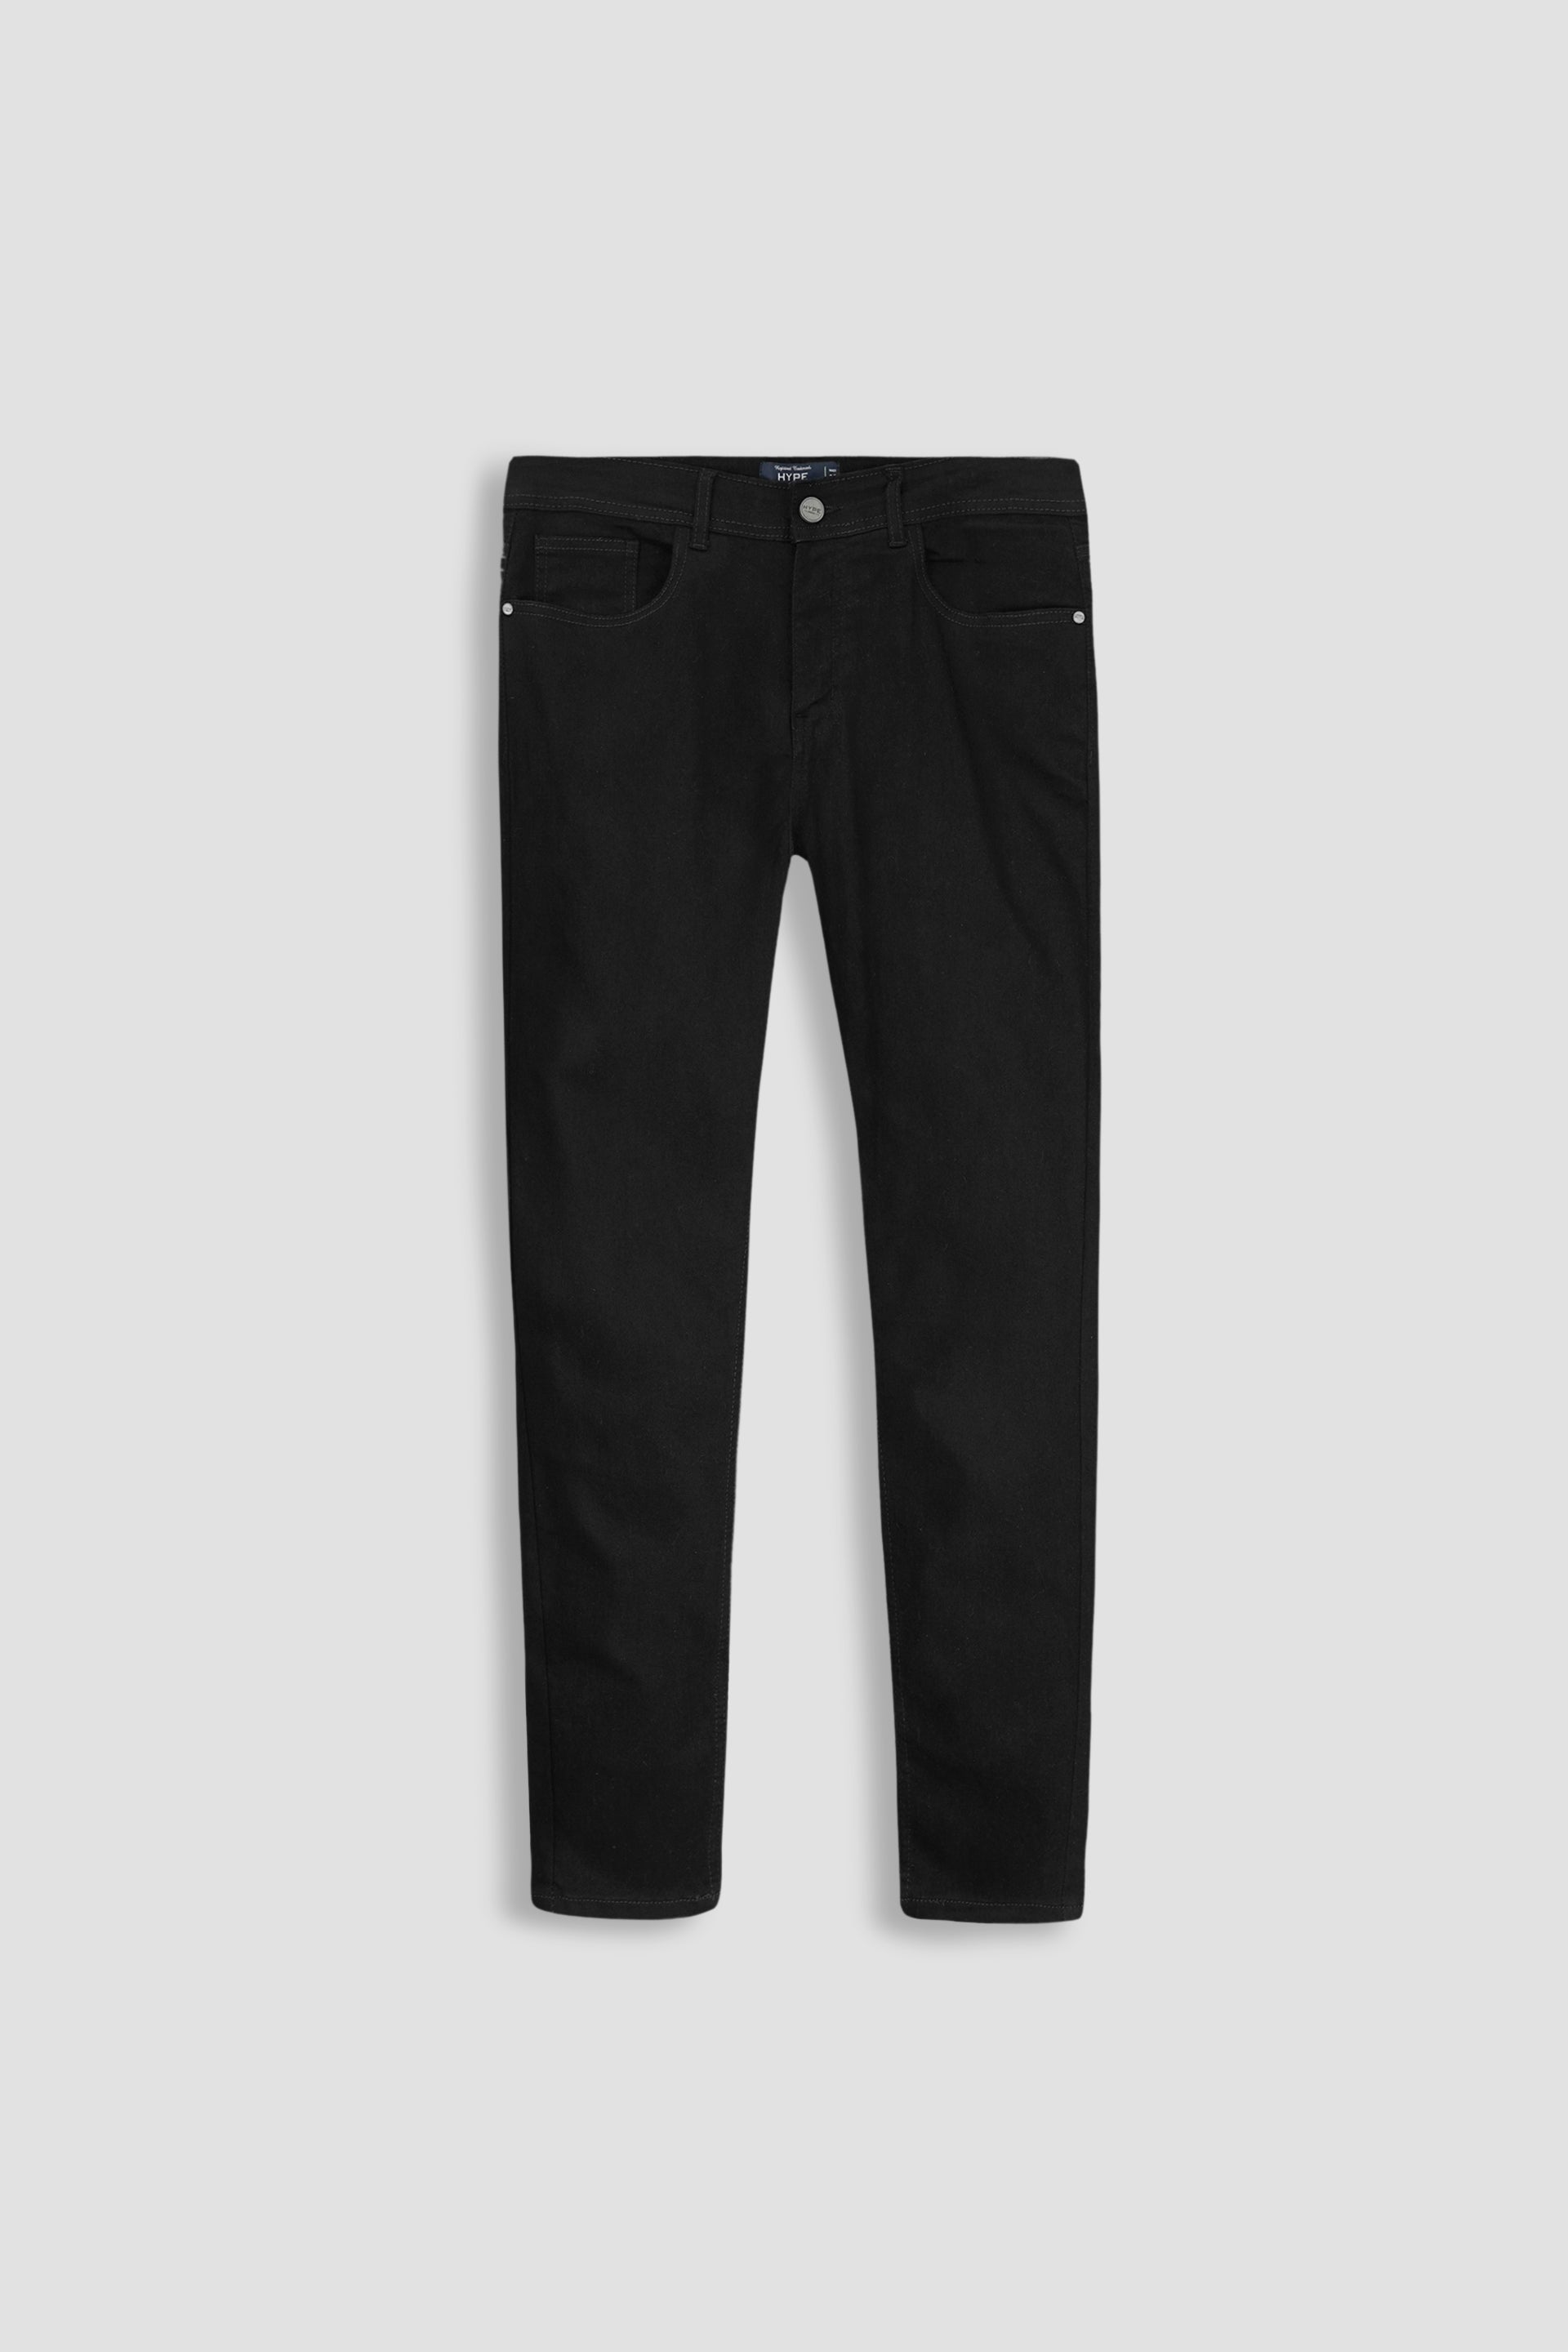 Black Slim Fit Denim Jeans 002485